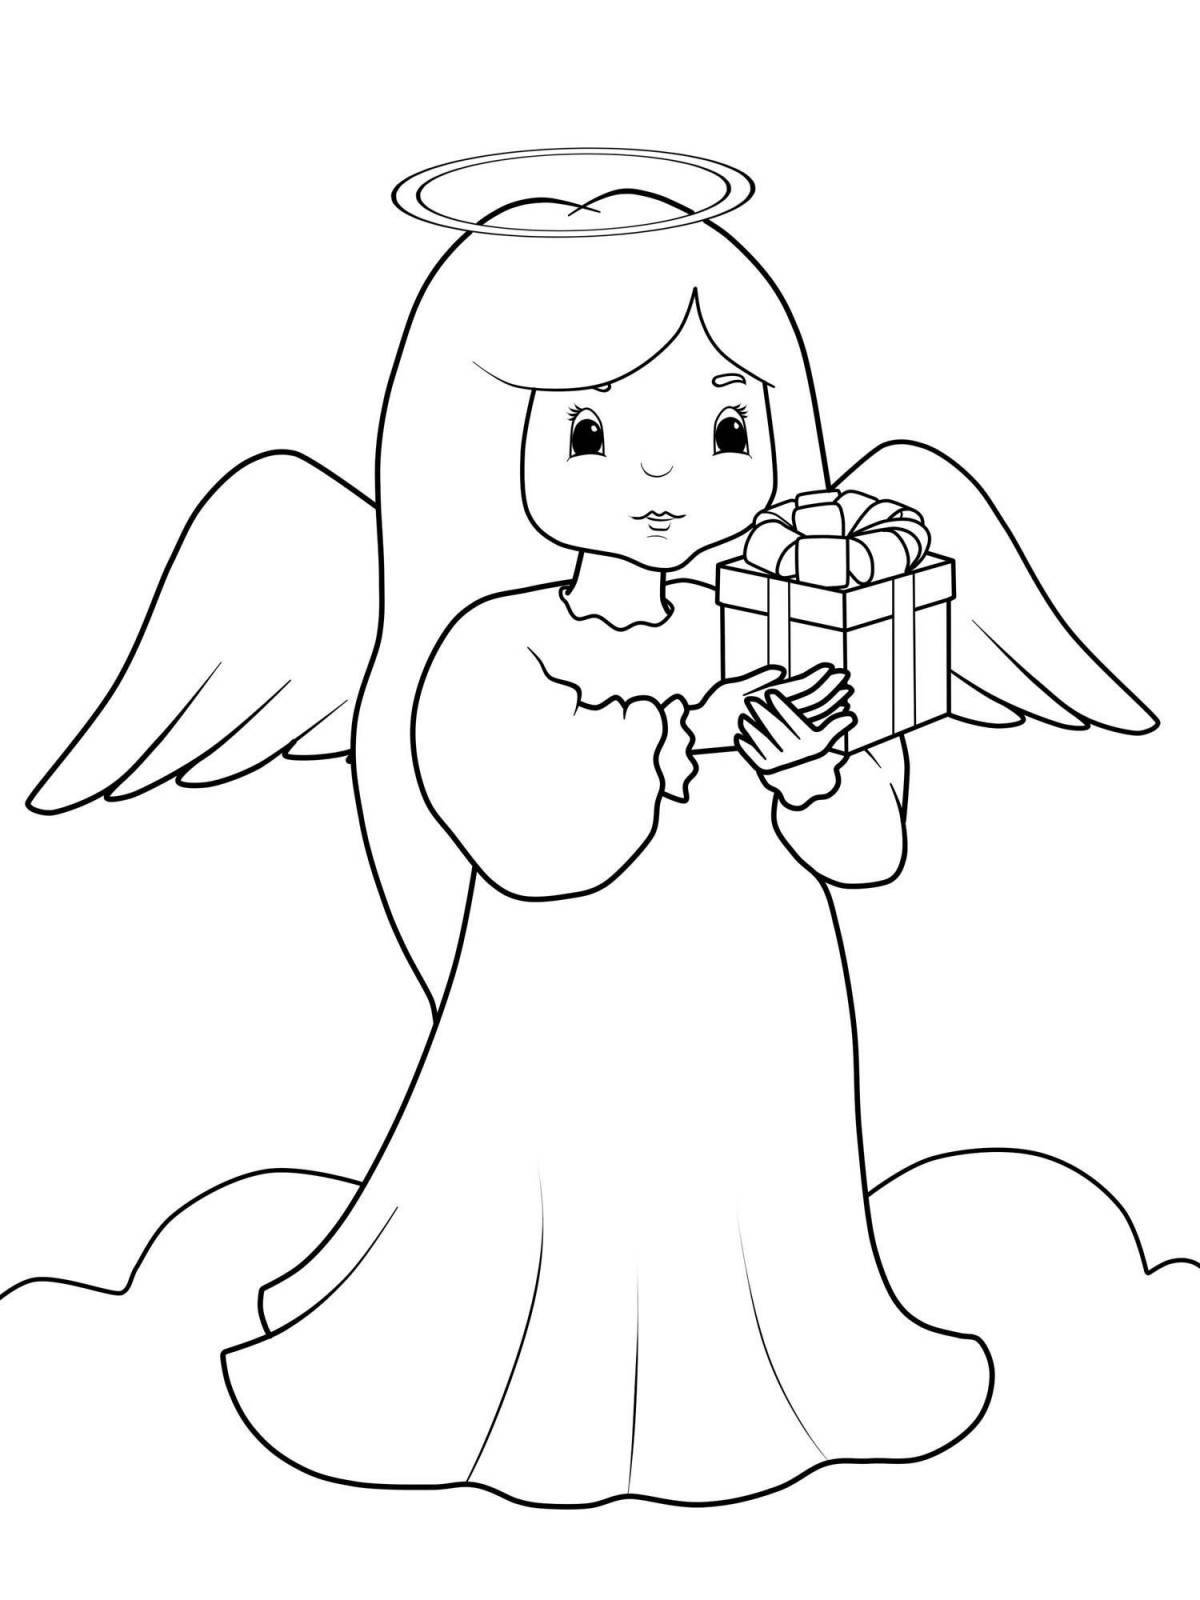 Grand Christmas angel coloring page